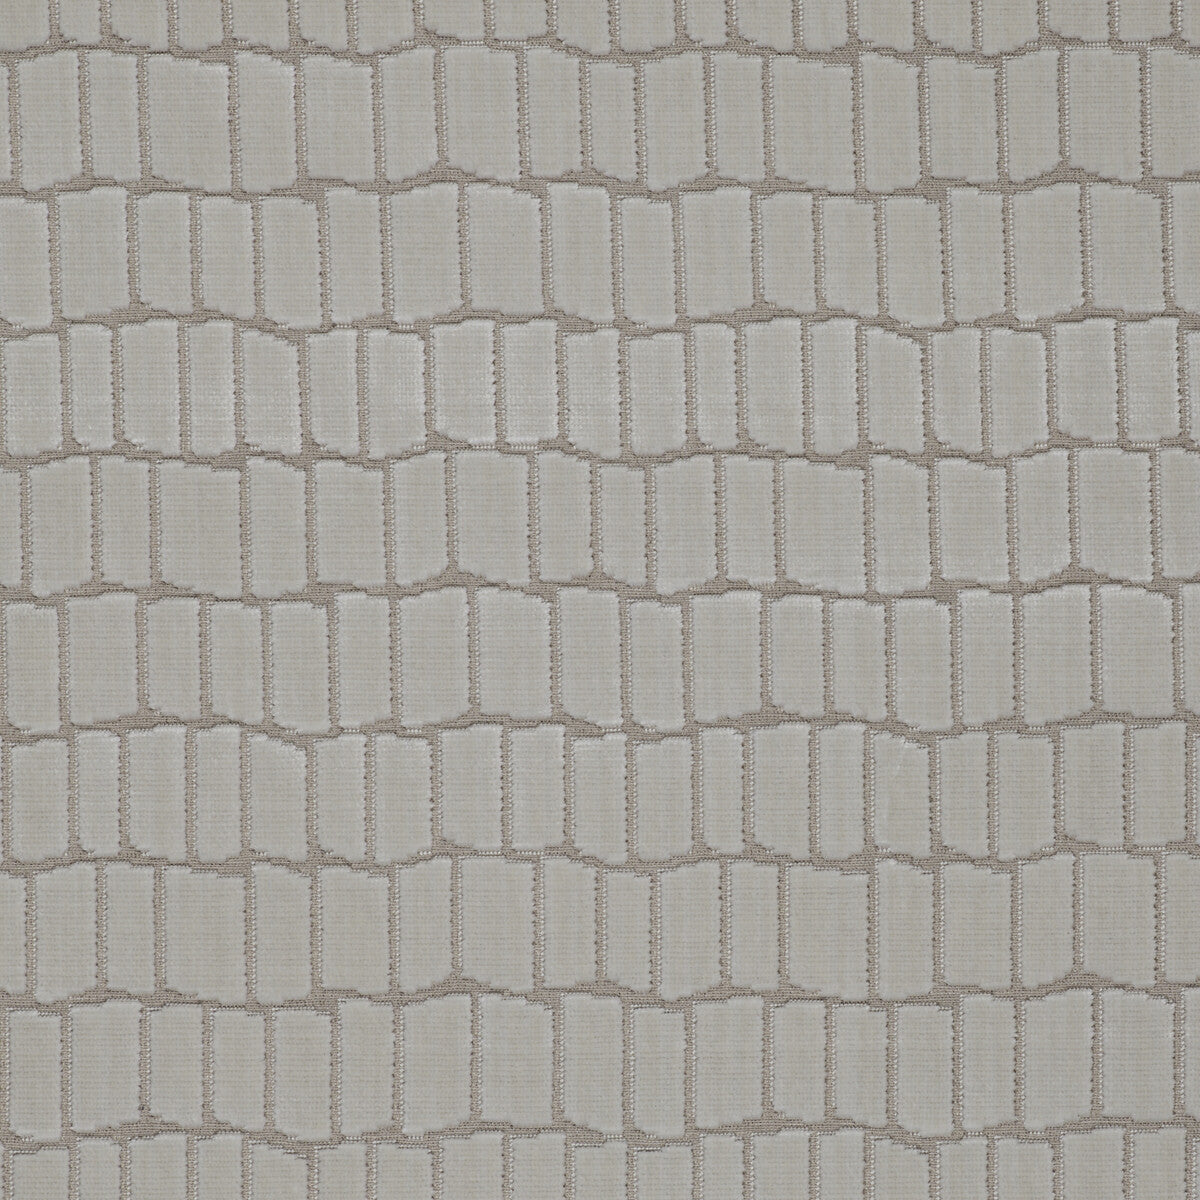 Maximo fabric in blanco color - pattern LCT1015.001.0 - by Gaston y Daniela in the Lorenzo Castillo V collection